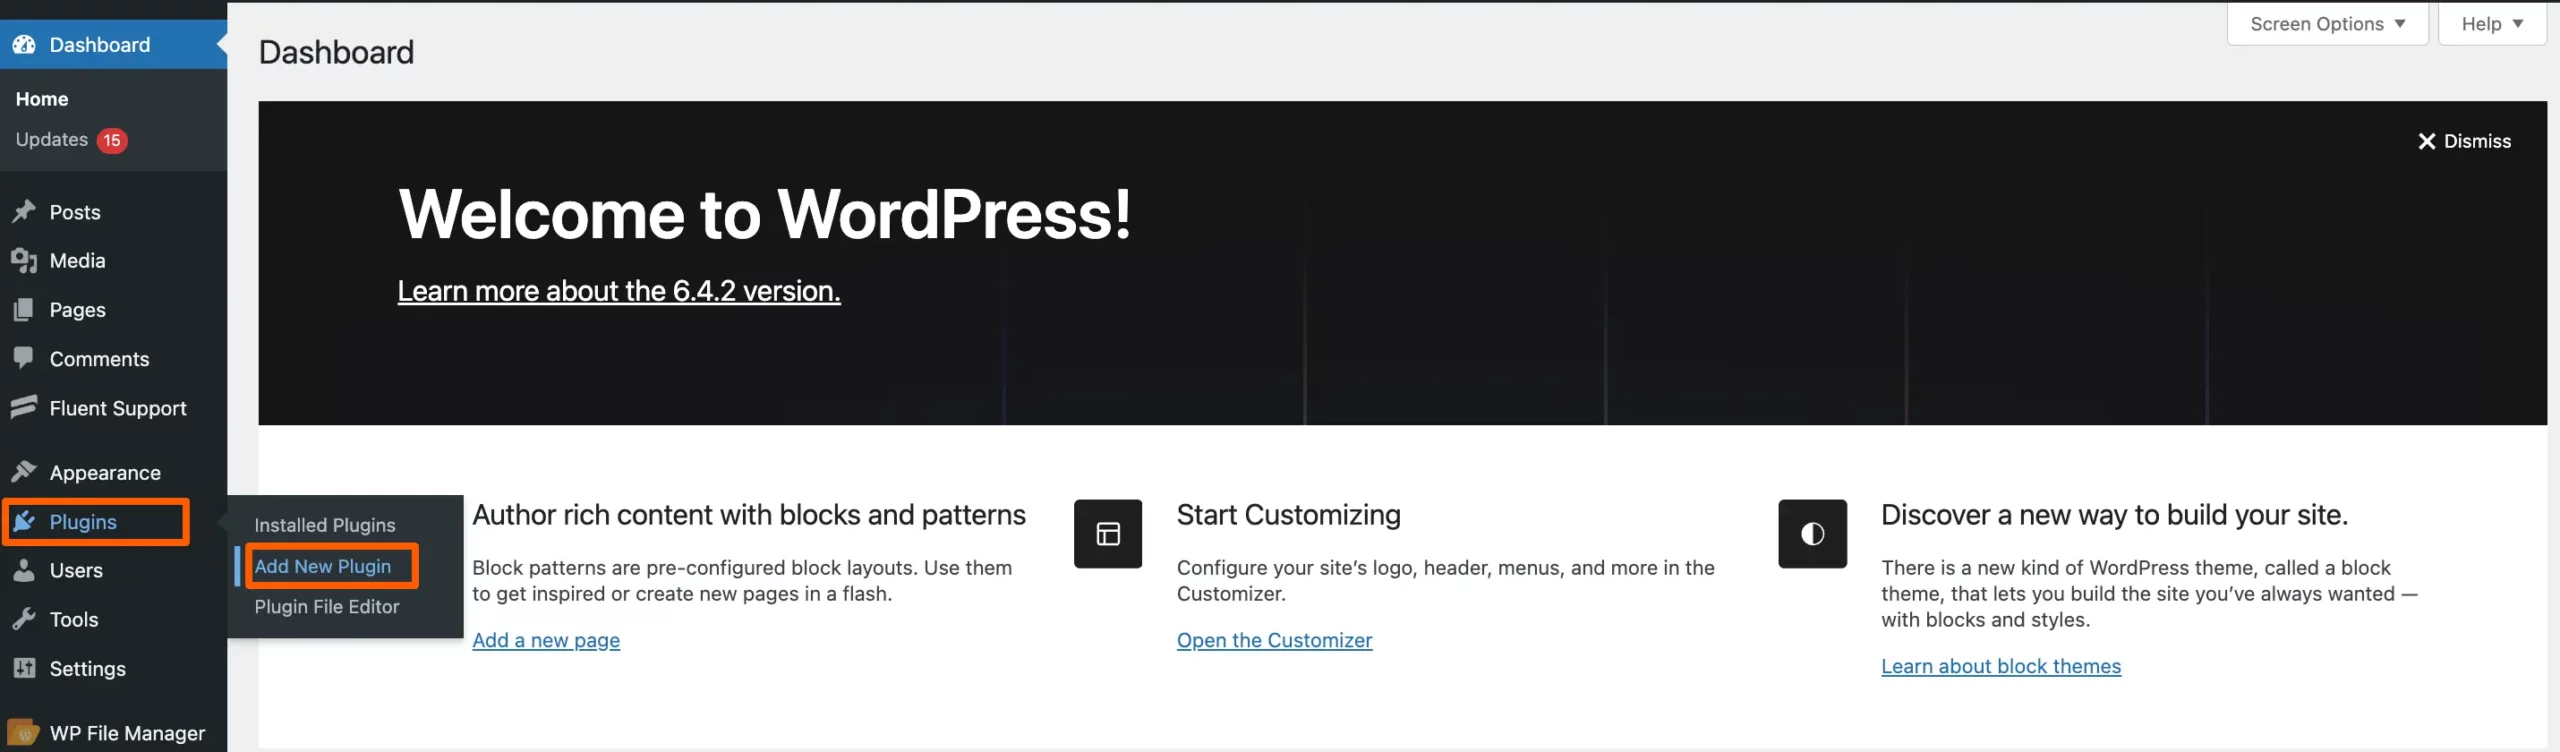 Add-new-Plugin-from-WordPress-Dashboard